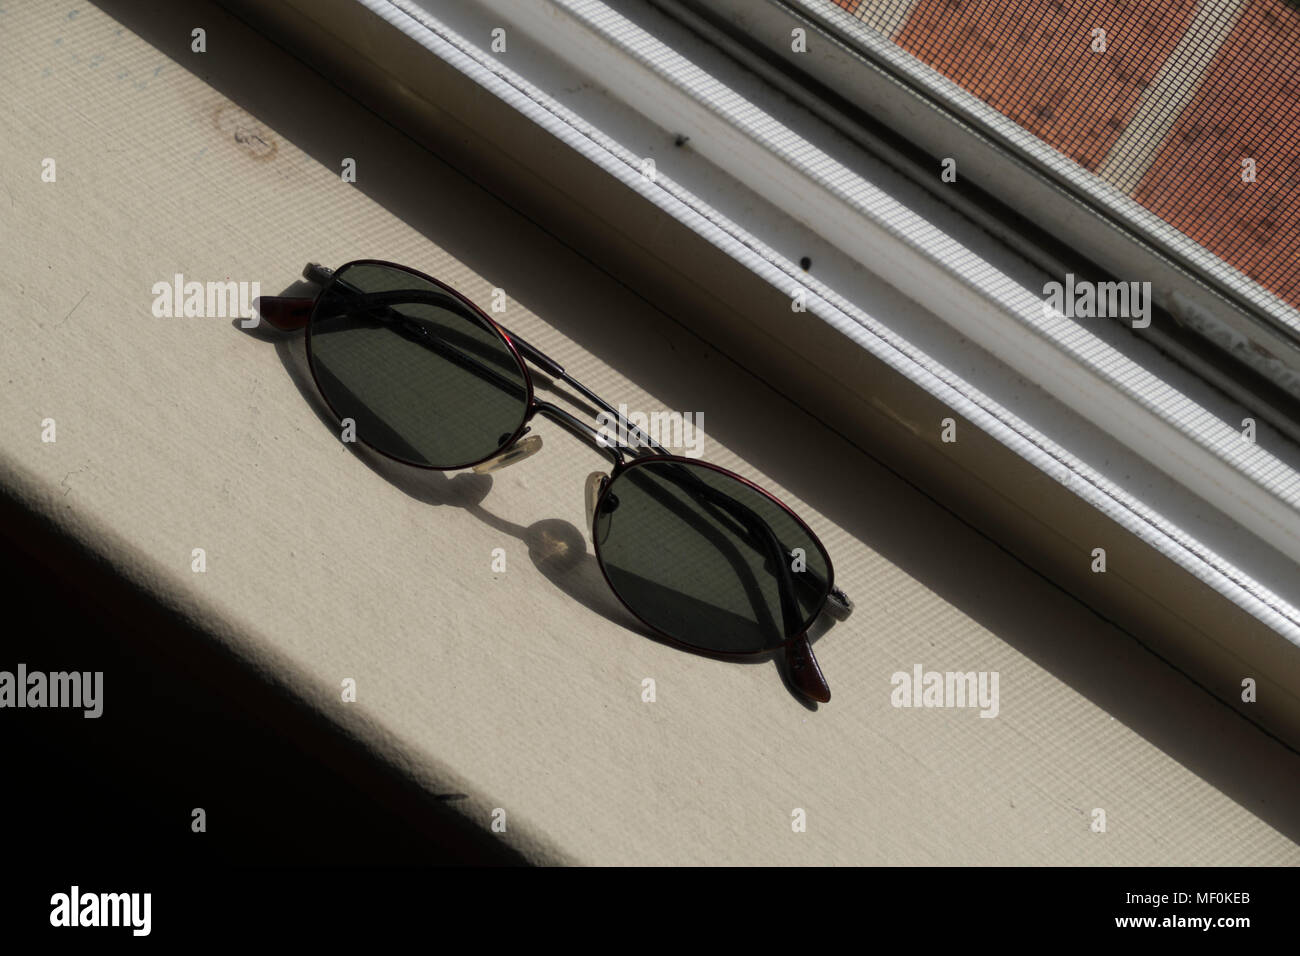 Sunglasses sitting a window sill. Stock Photo